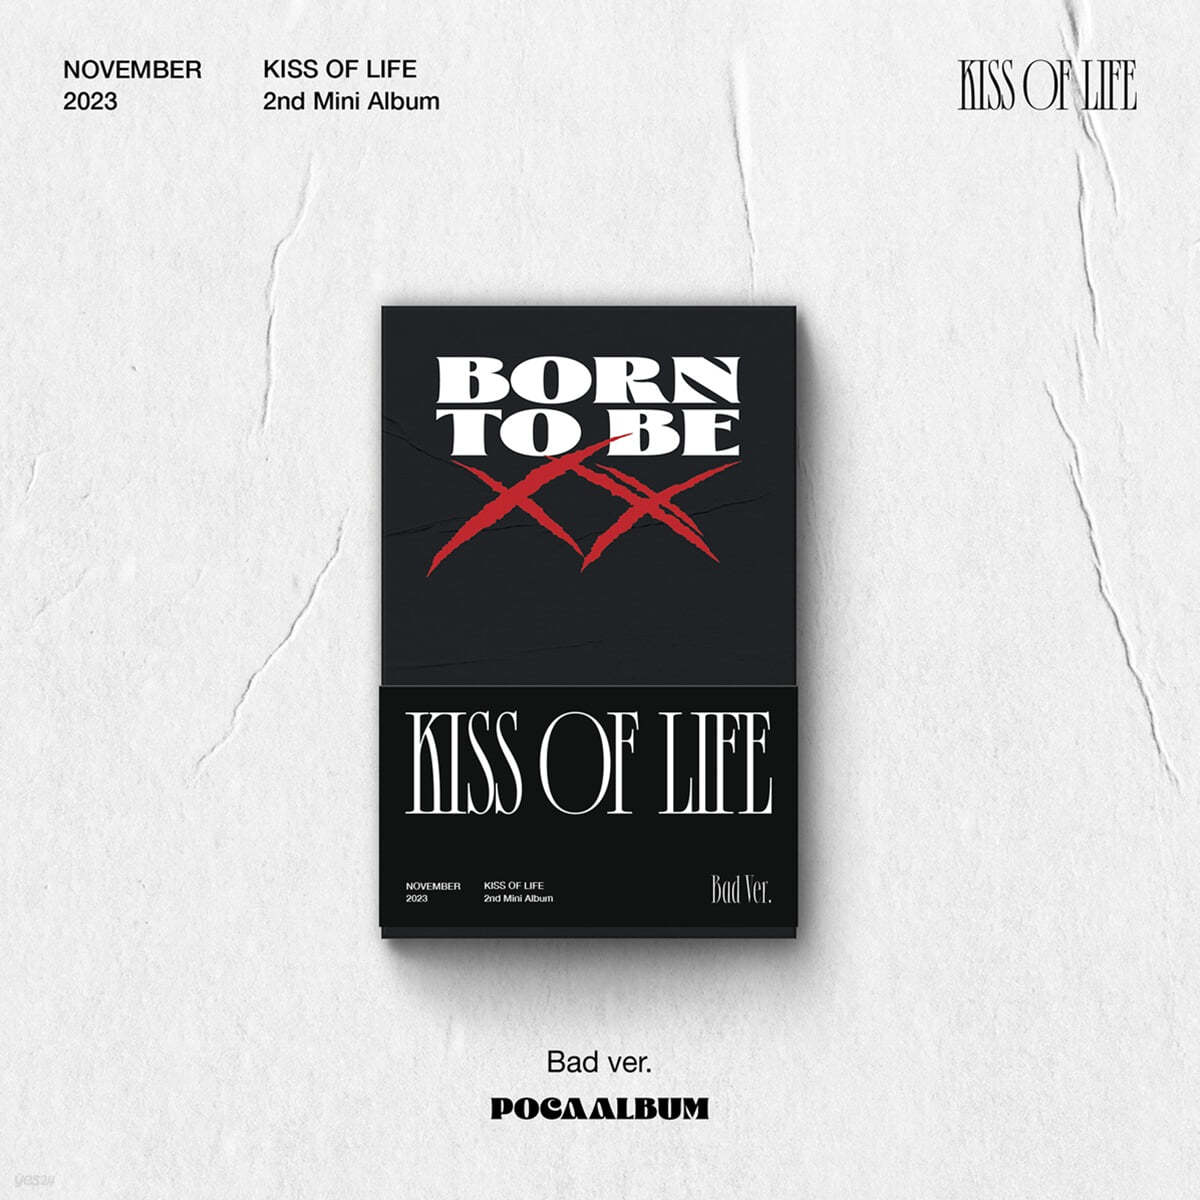 KISS OF LIFE - 2nd Mini Album Born to be XX (POCA) (Bad Ver.)